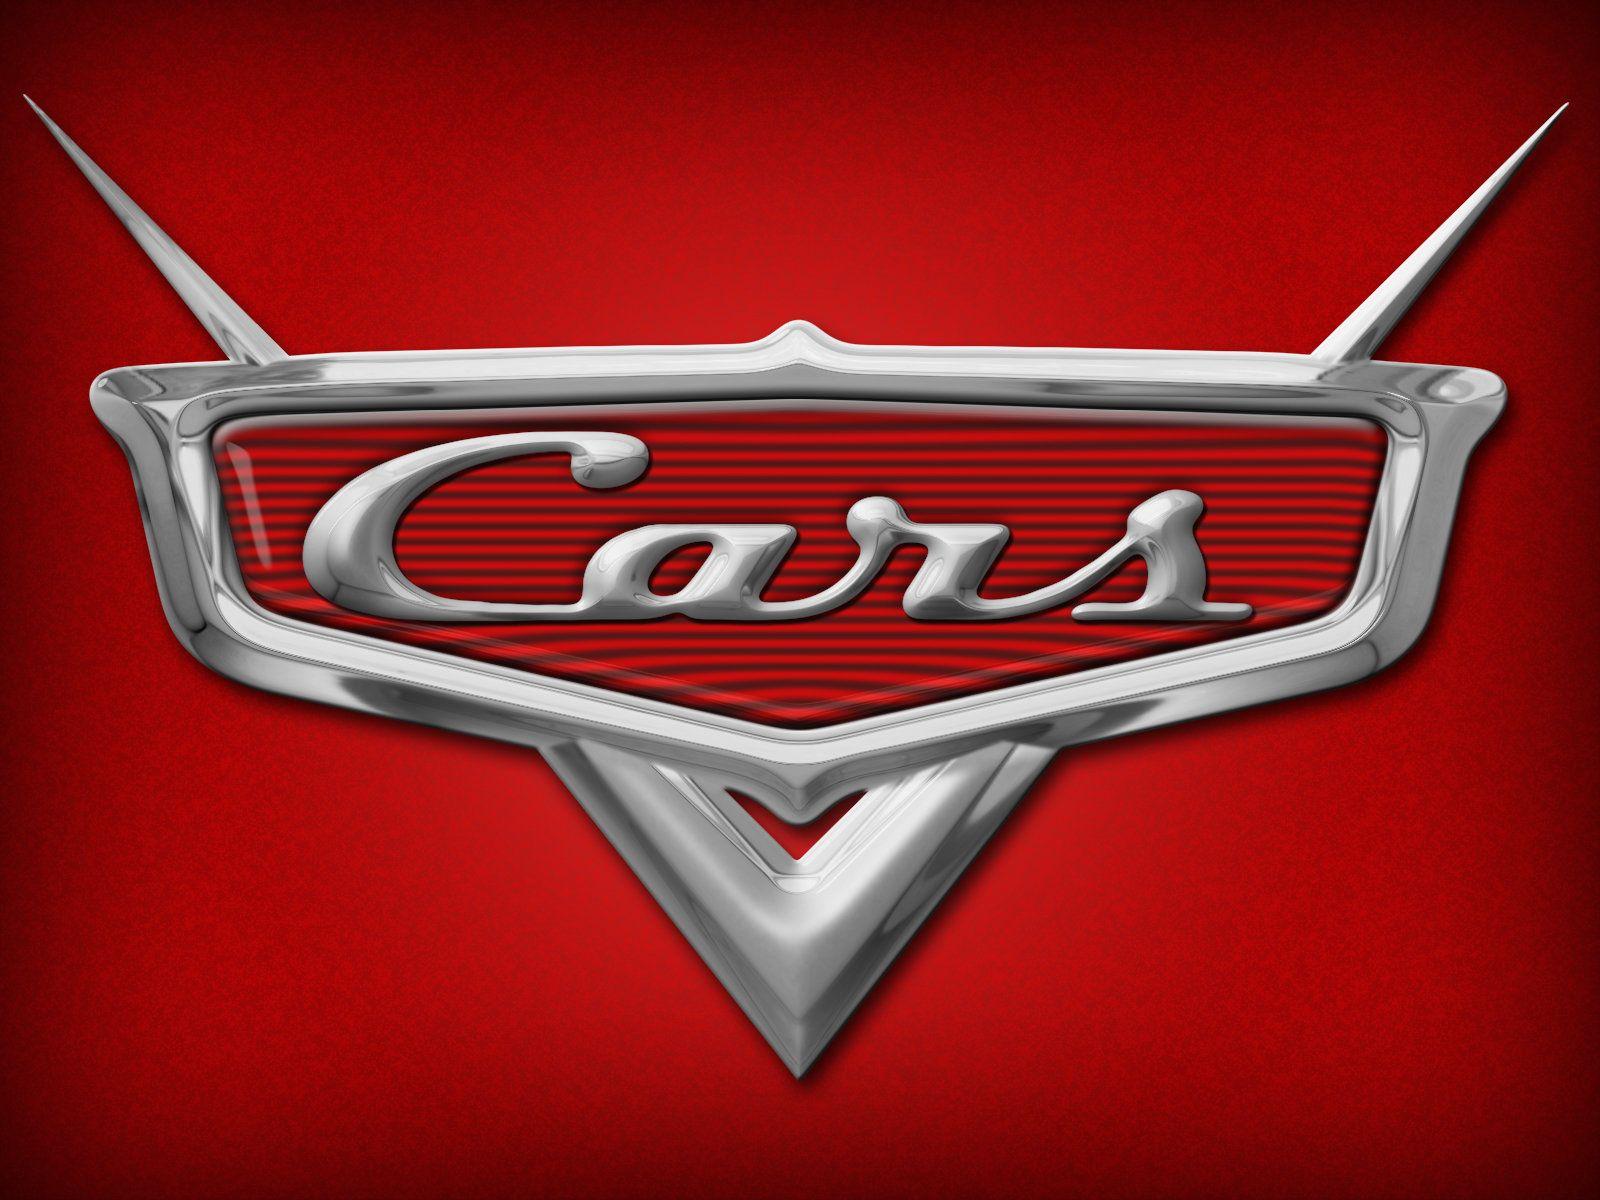 Cars Movie Logo - Cars Logo PSD by vicing on DeviantArt